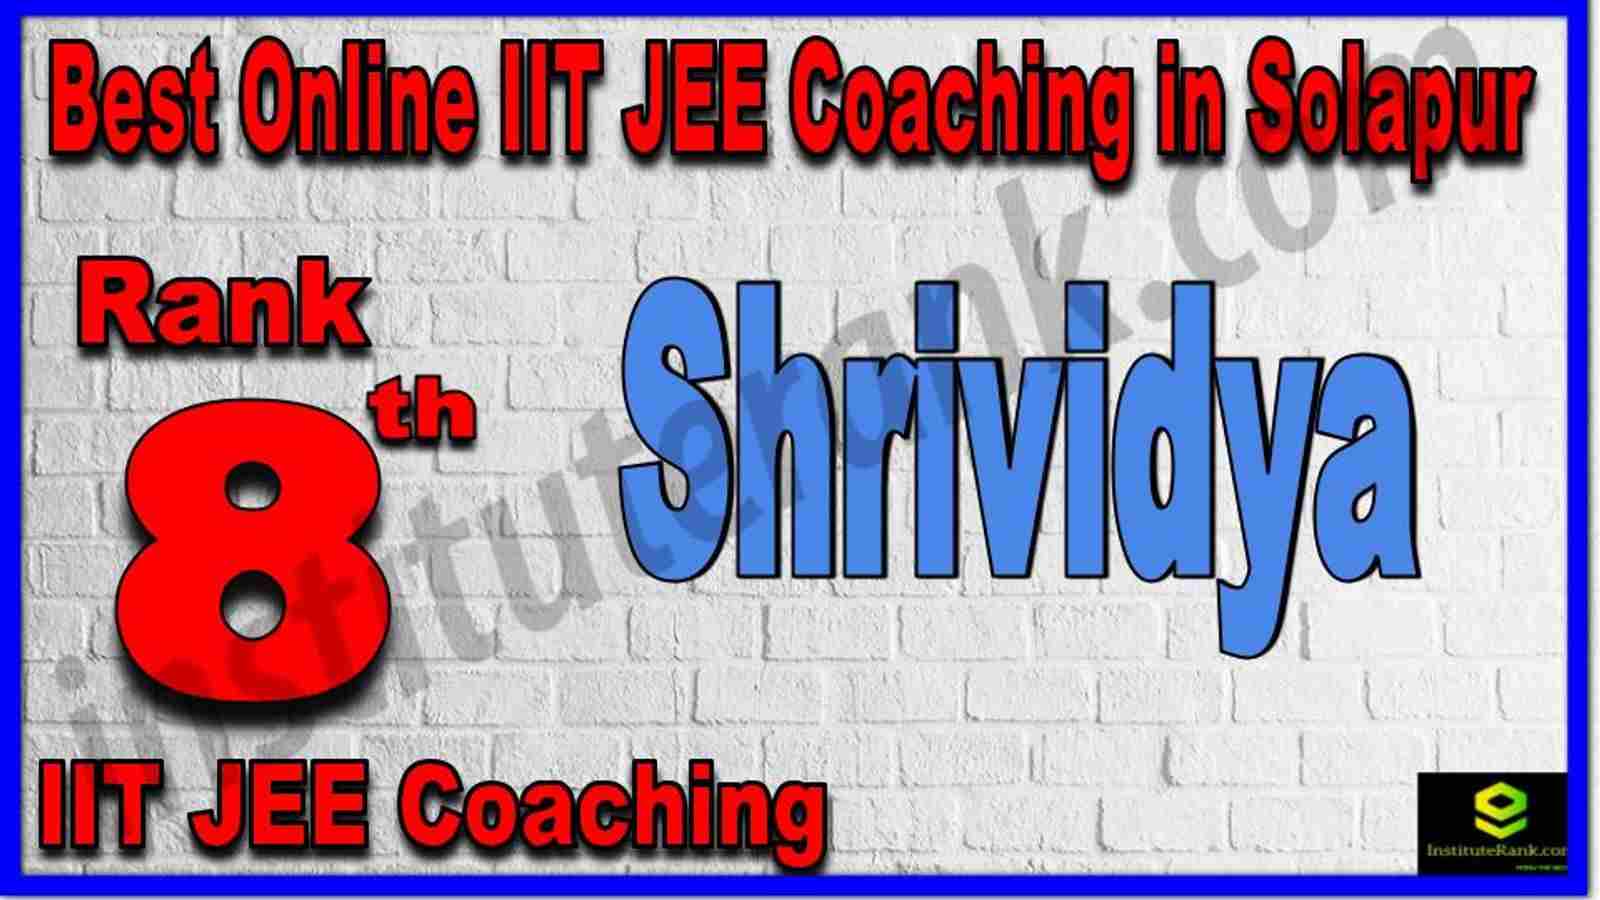 Rank 8th Best Online IIT JEE Coaching in Solapur